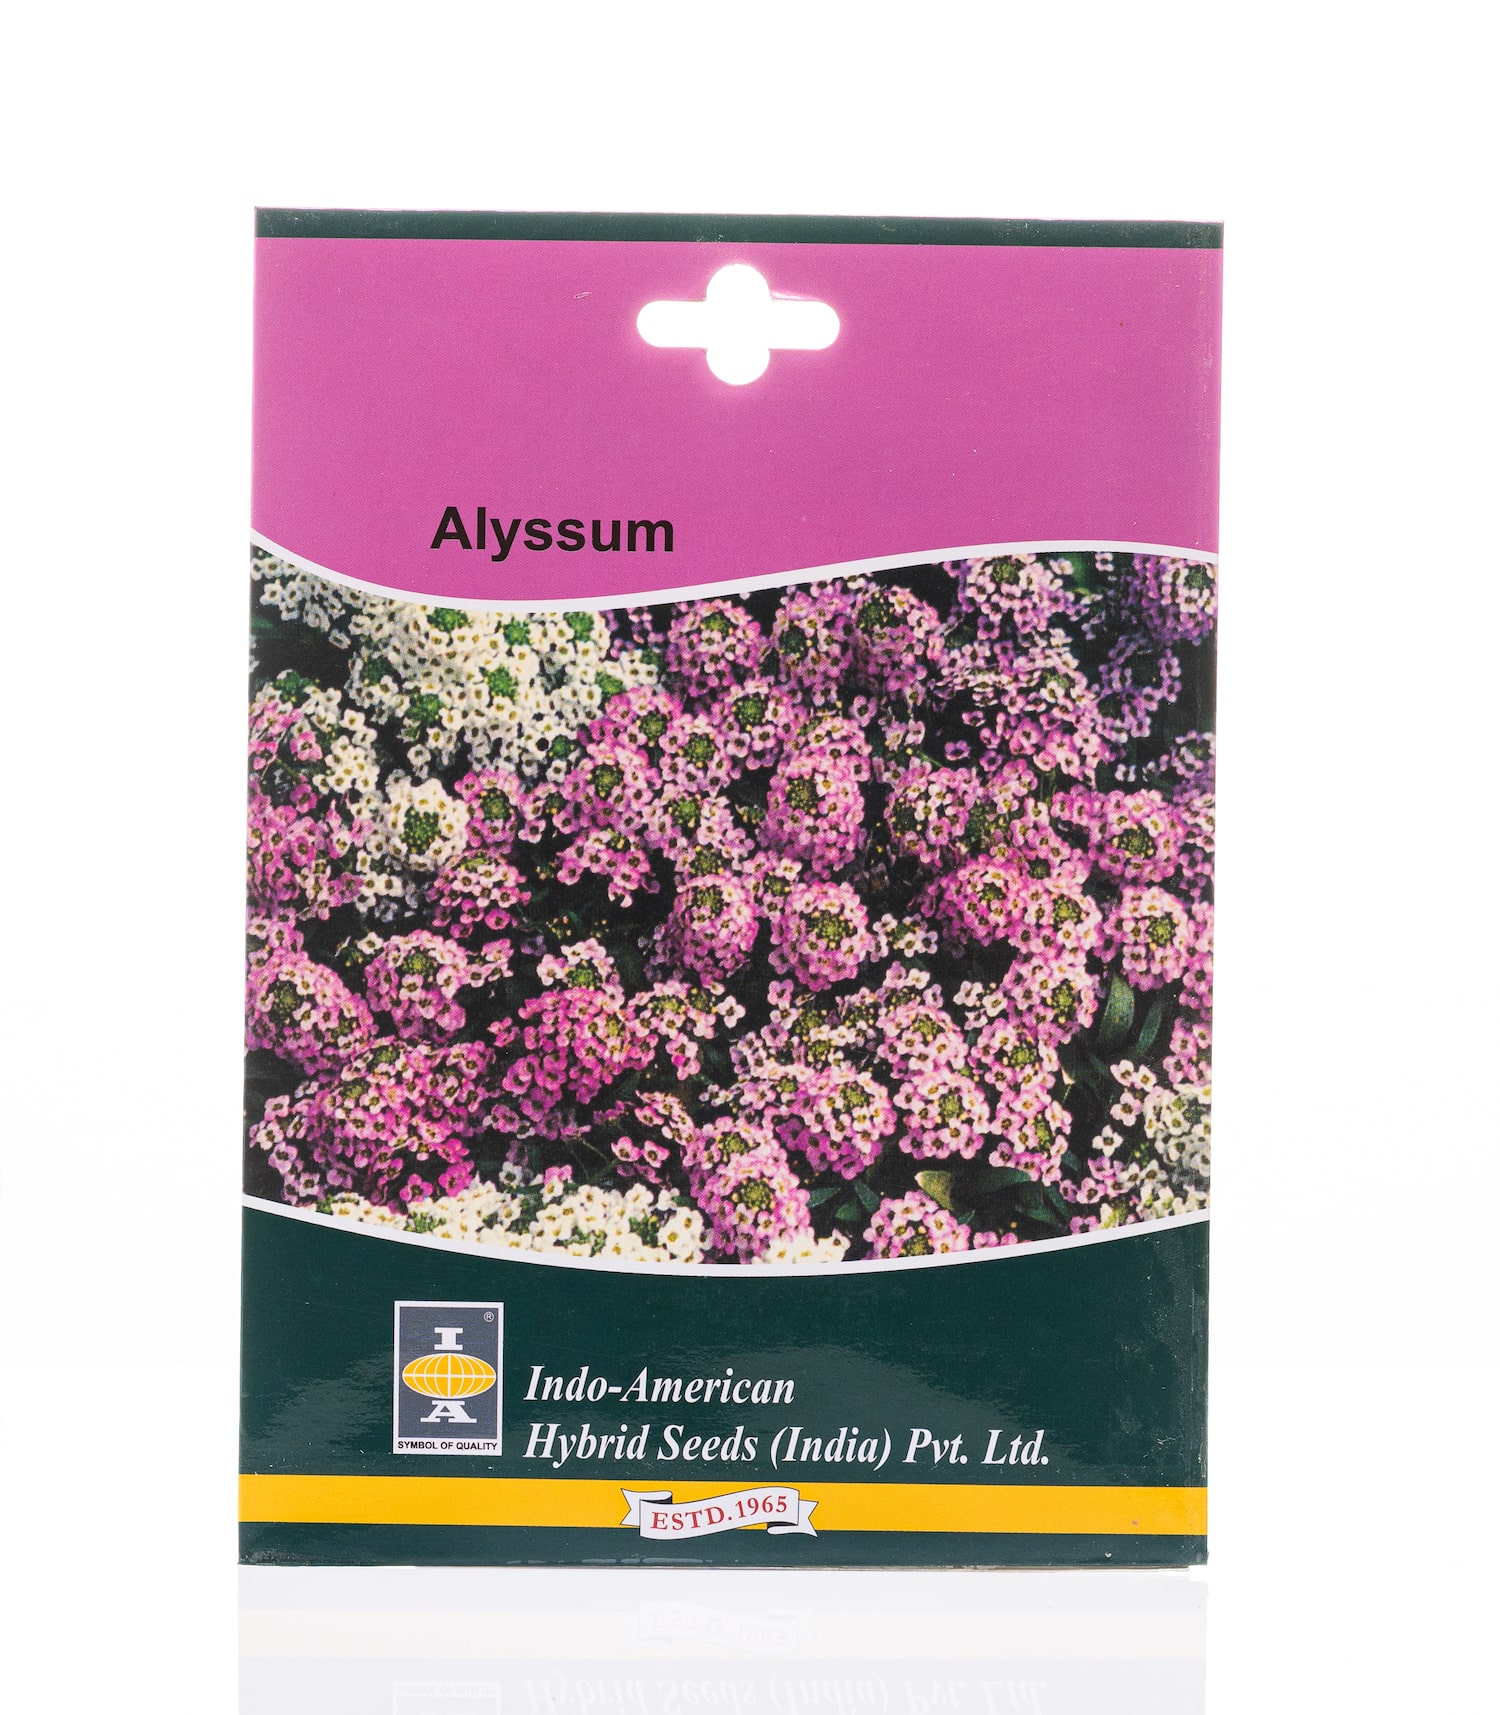 Alyssum indo american hybrid seeds planters pots buy seeds online horticult